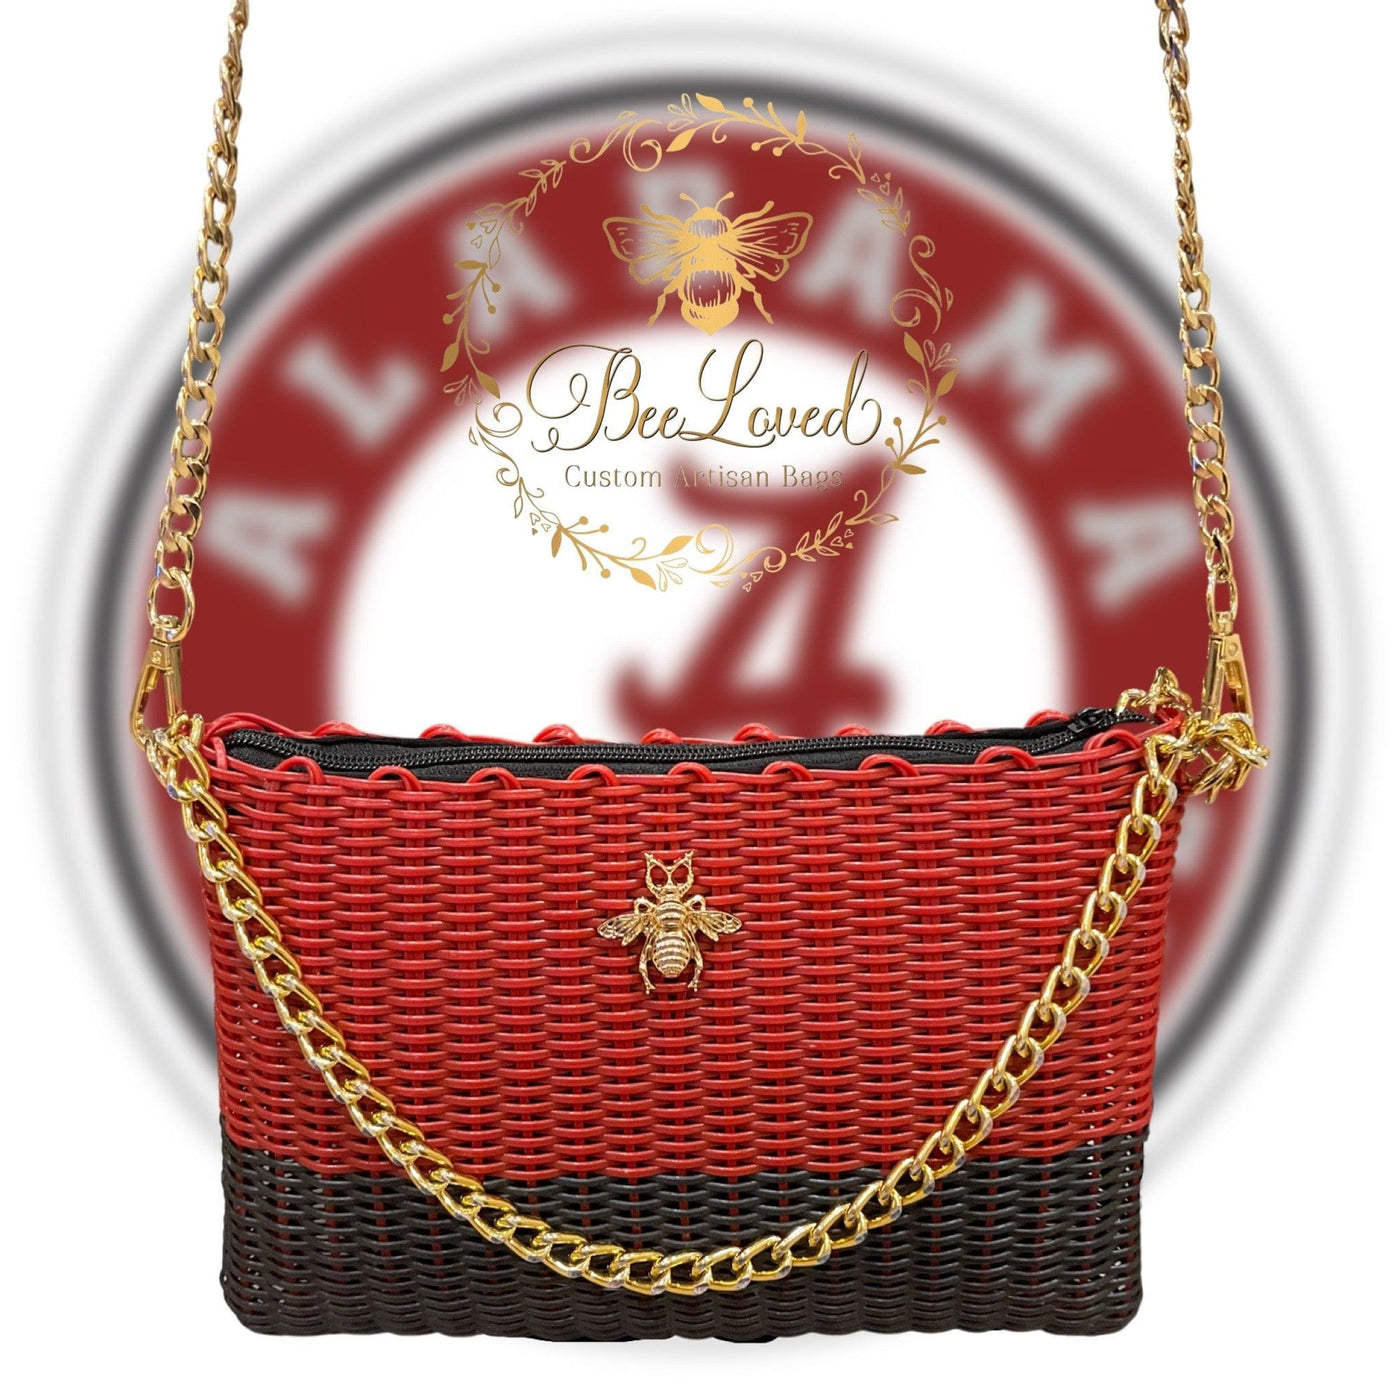 BeeLoved Custom Artisan Bags and Gifts Handbags Medium / Crossbody Gold Roll Tide Crossbody/Clutch Bag